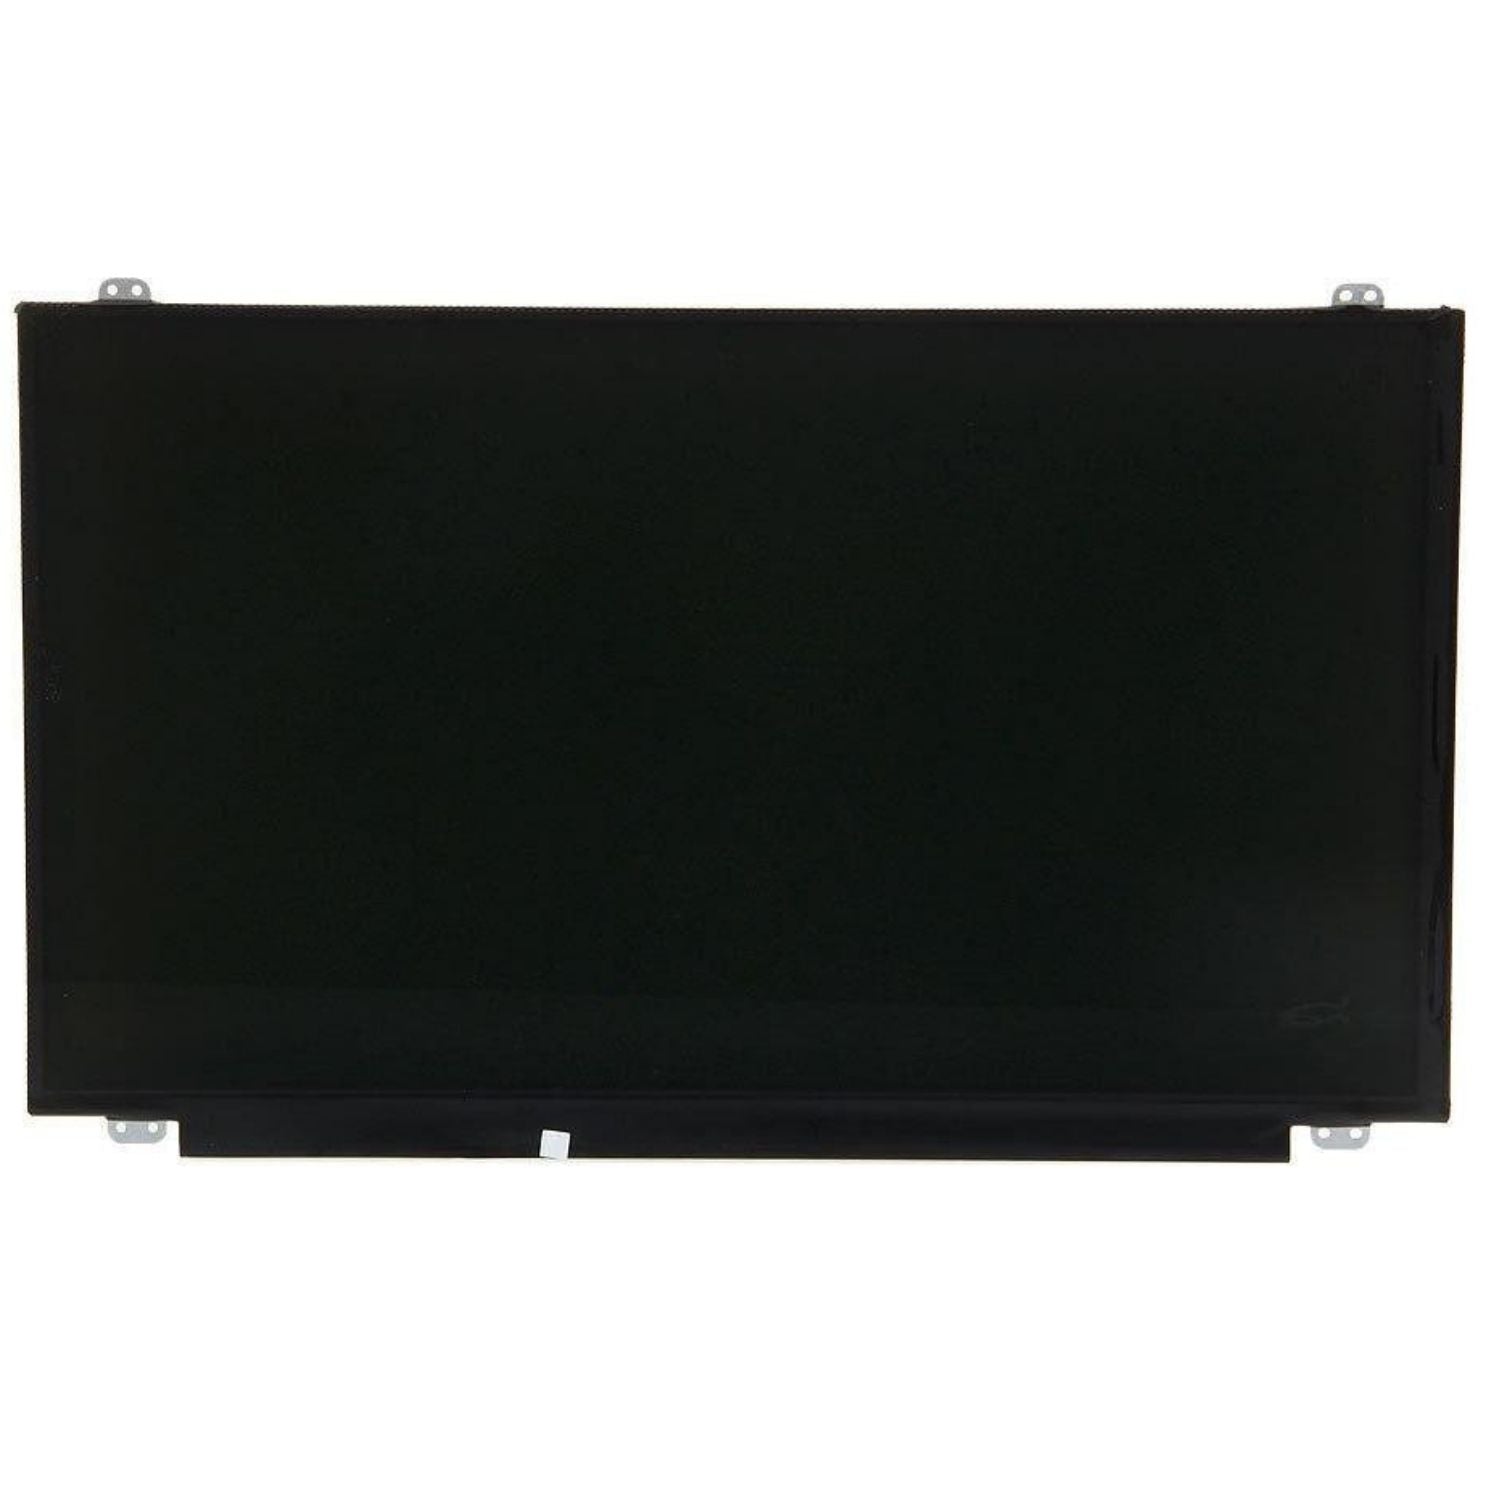 Sony Vaio SVE15128CN 15.6 inch 40 pin paper wide Screen WXGA (1366×768) with 1yr warranty